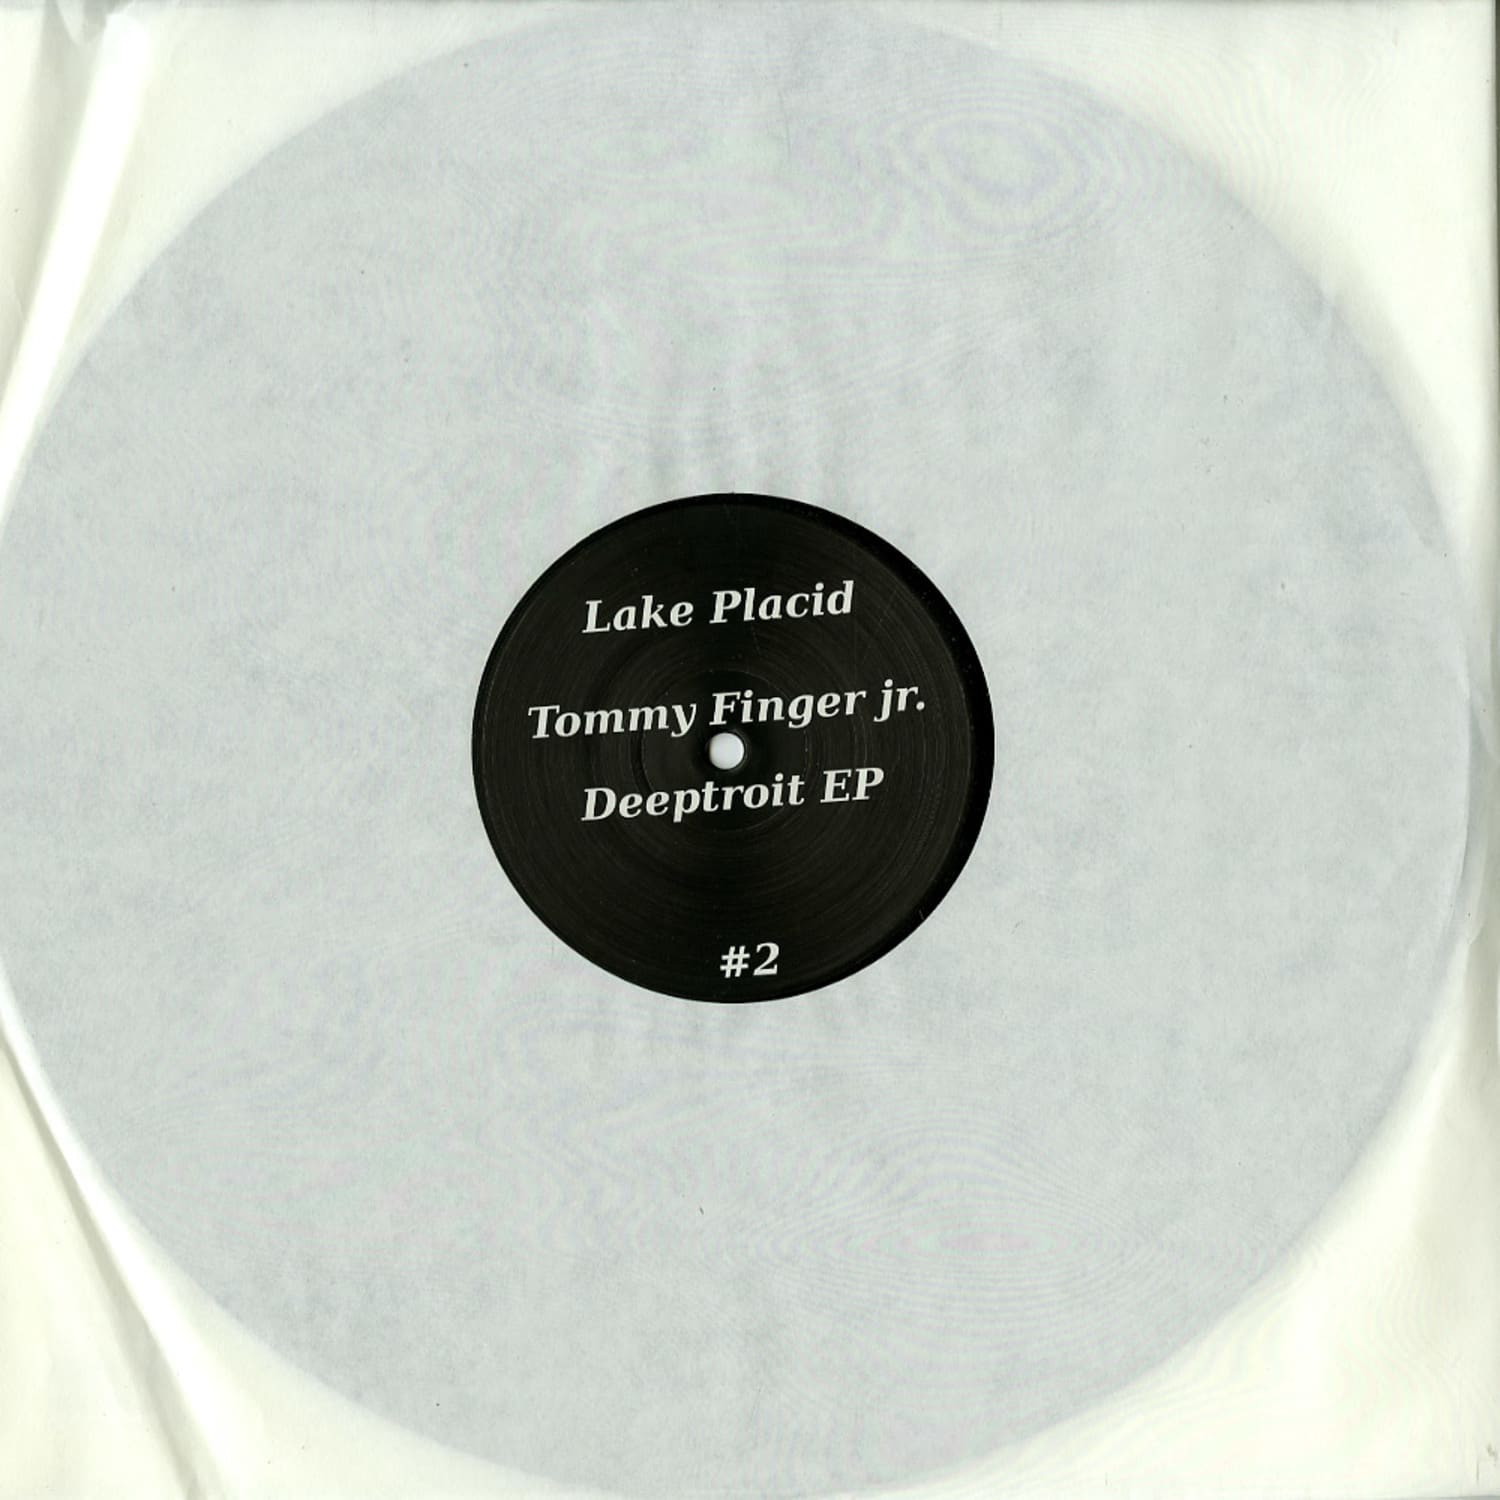 Tommy Finger Jr. - DEEPTROIT EP